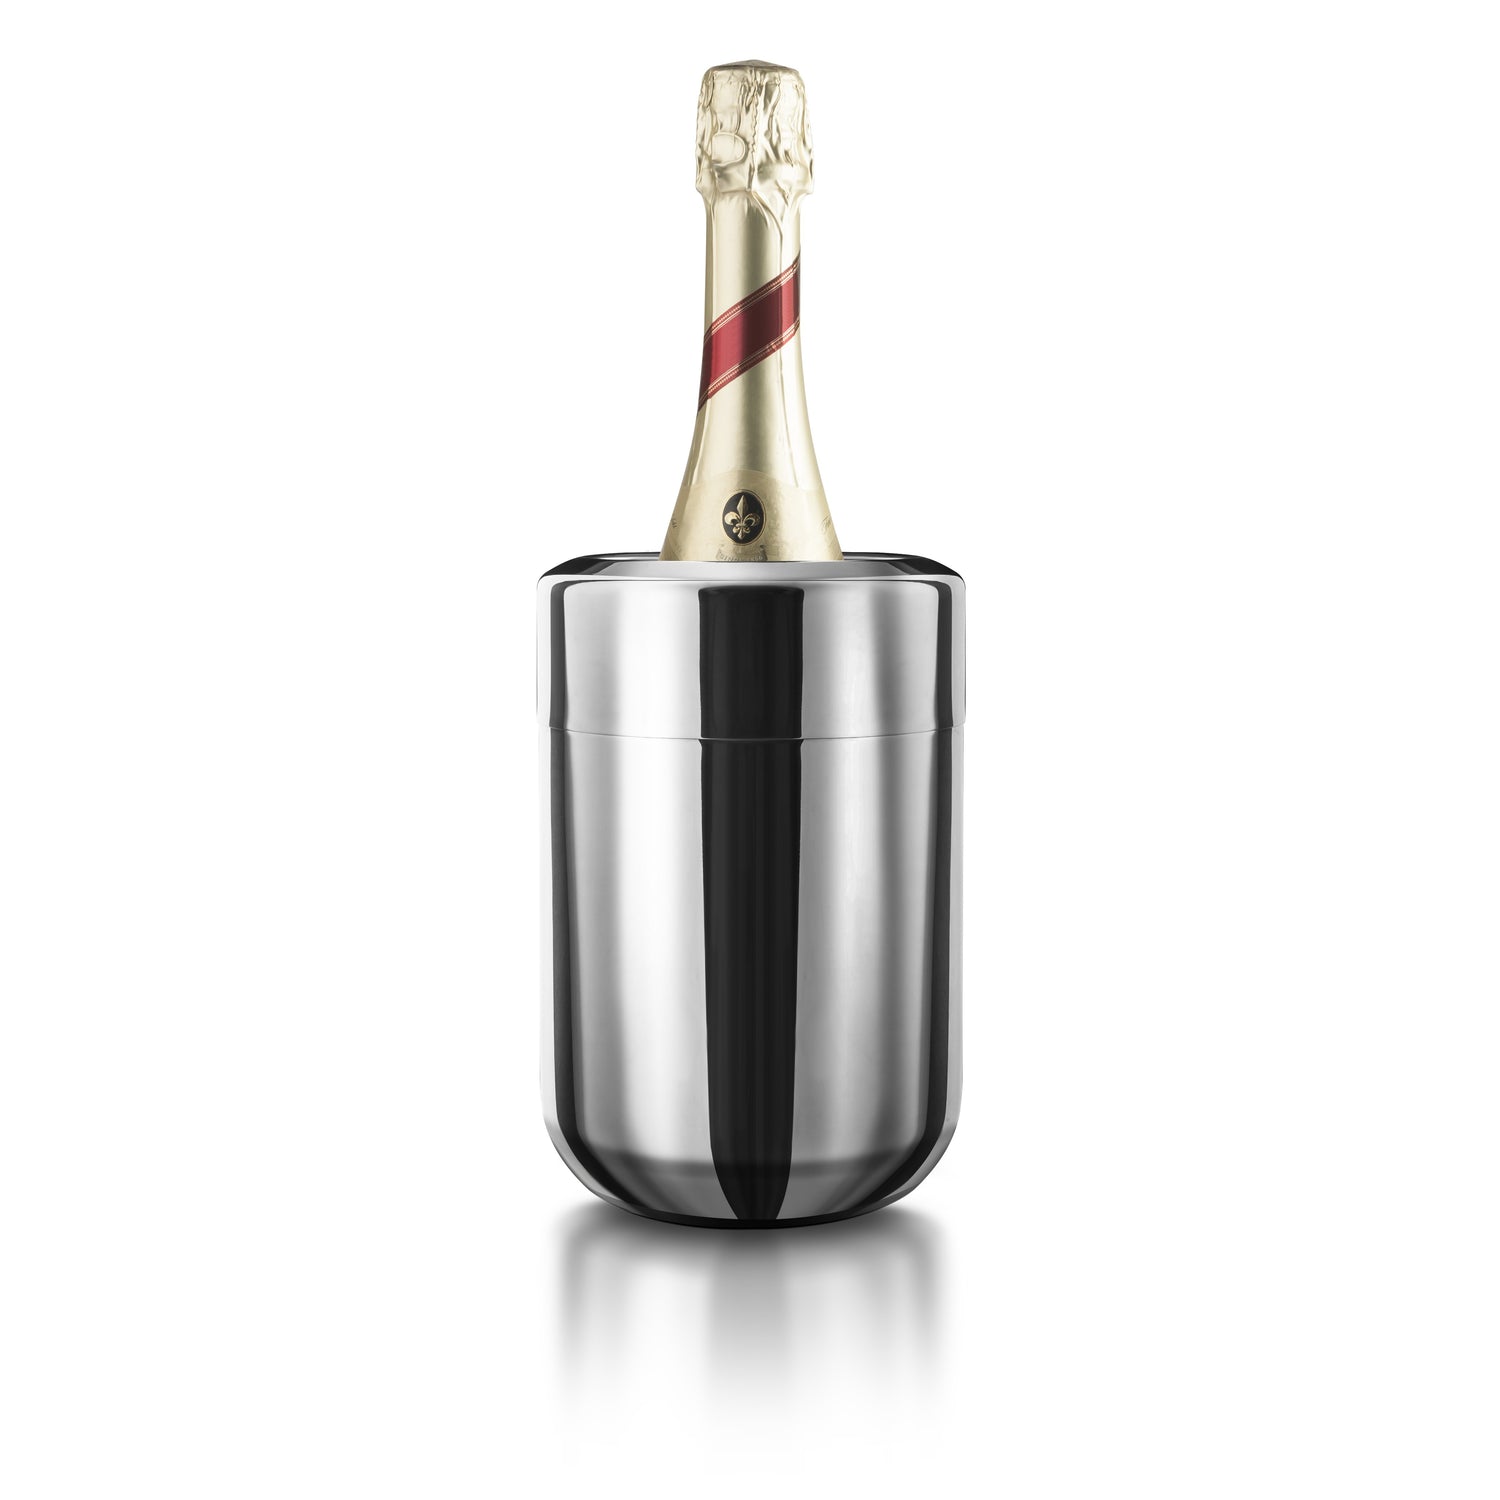 Enoluxe Wine Chiller Bucket - Champagne Bucket - Elegant White Wine Bucket  or Champagne Chiller for …See more Enoluxe Wine Chiller Bucket - Champagne